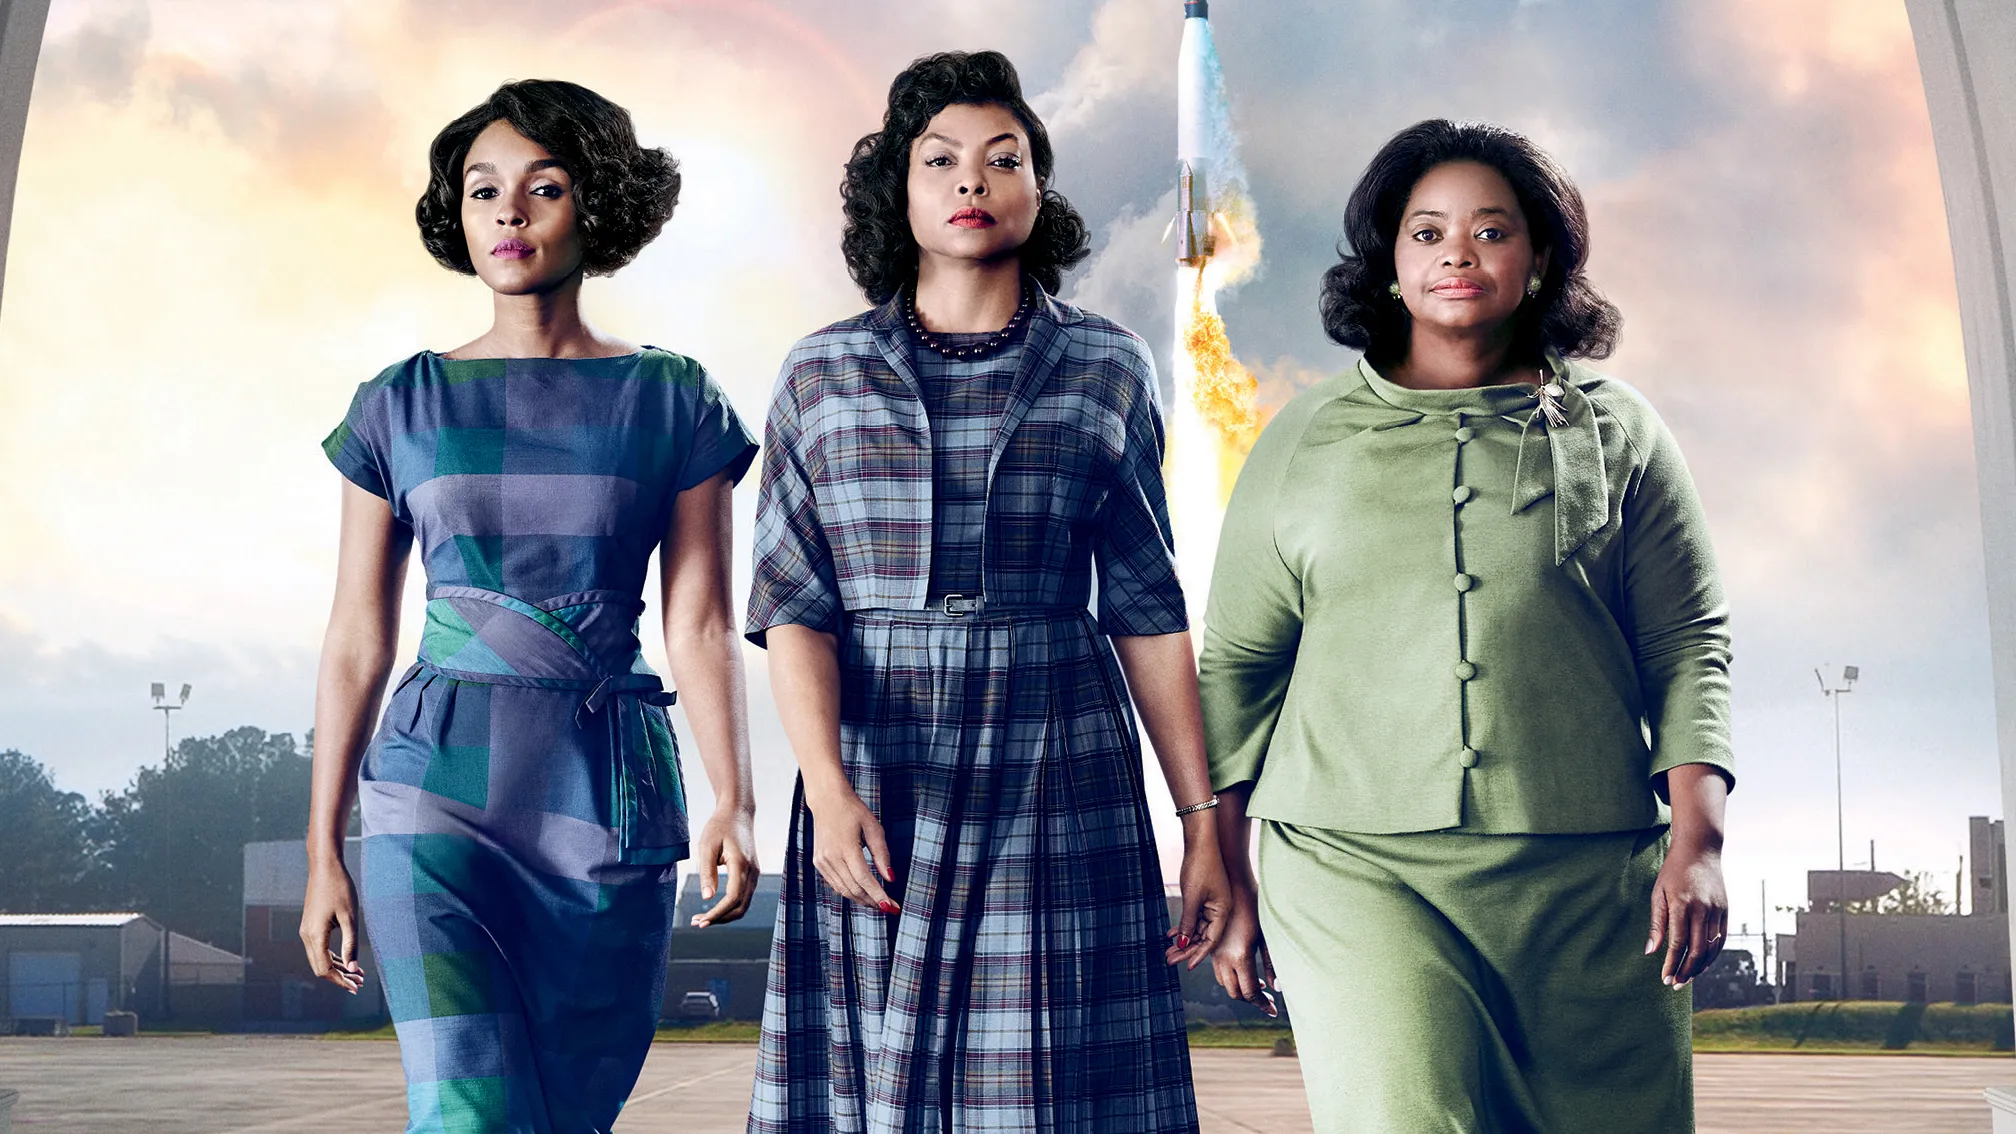 Meet the Amazing Black Women Pioneers of NASA behind the movie Hidden Figures